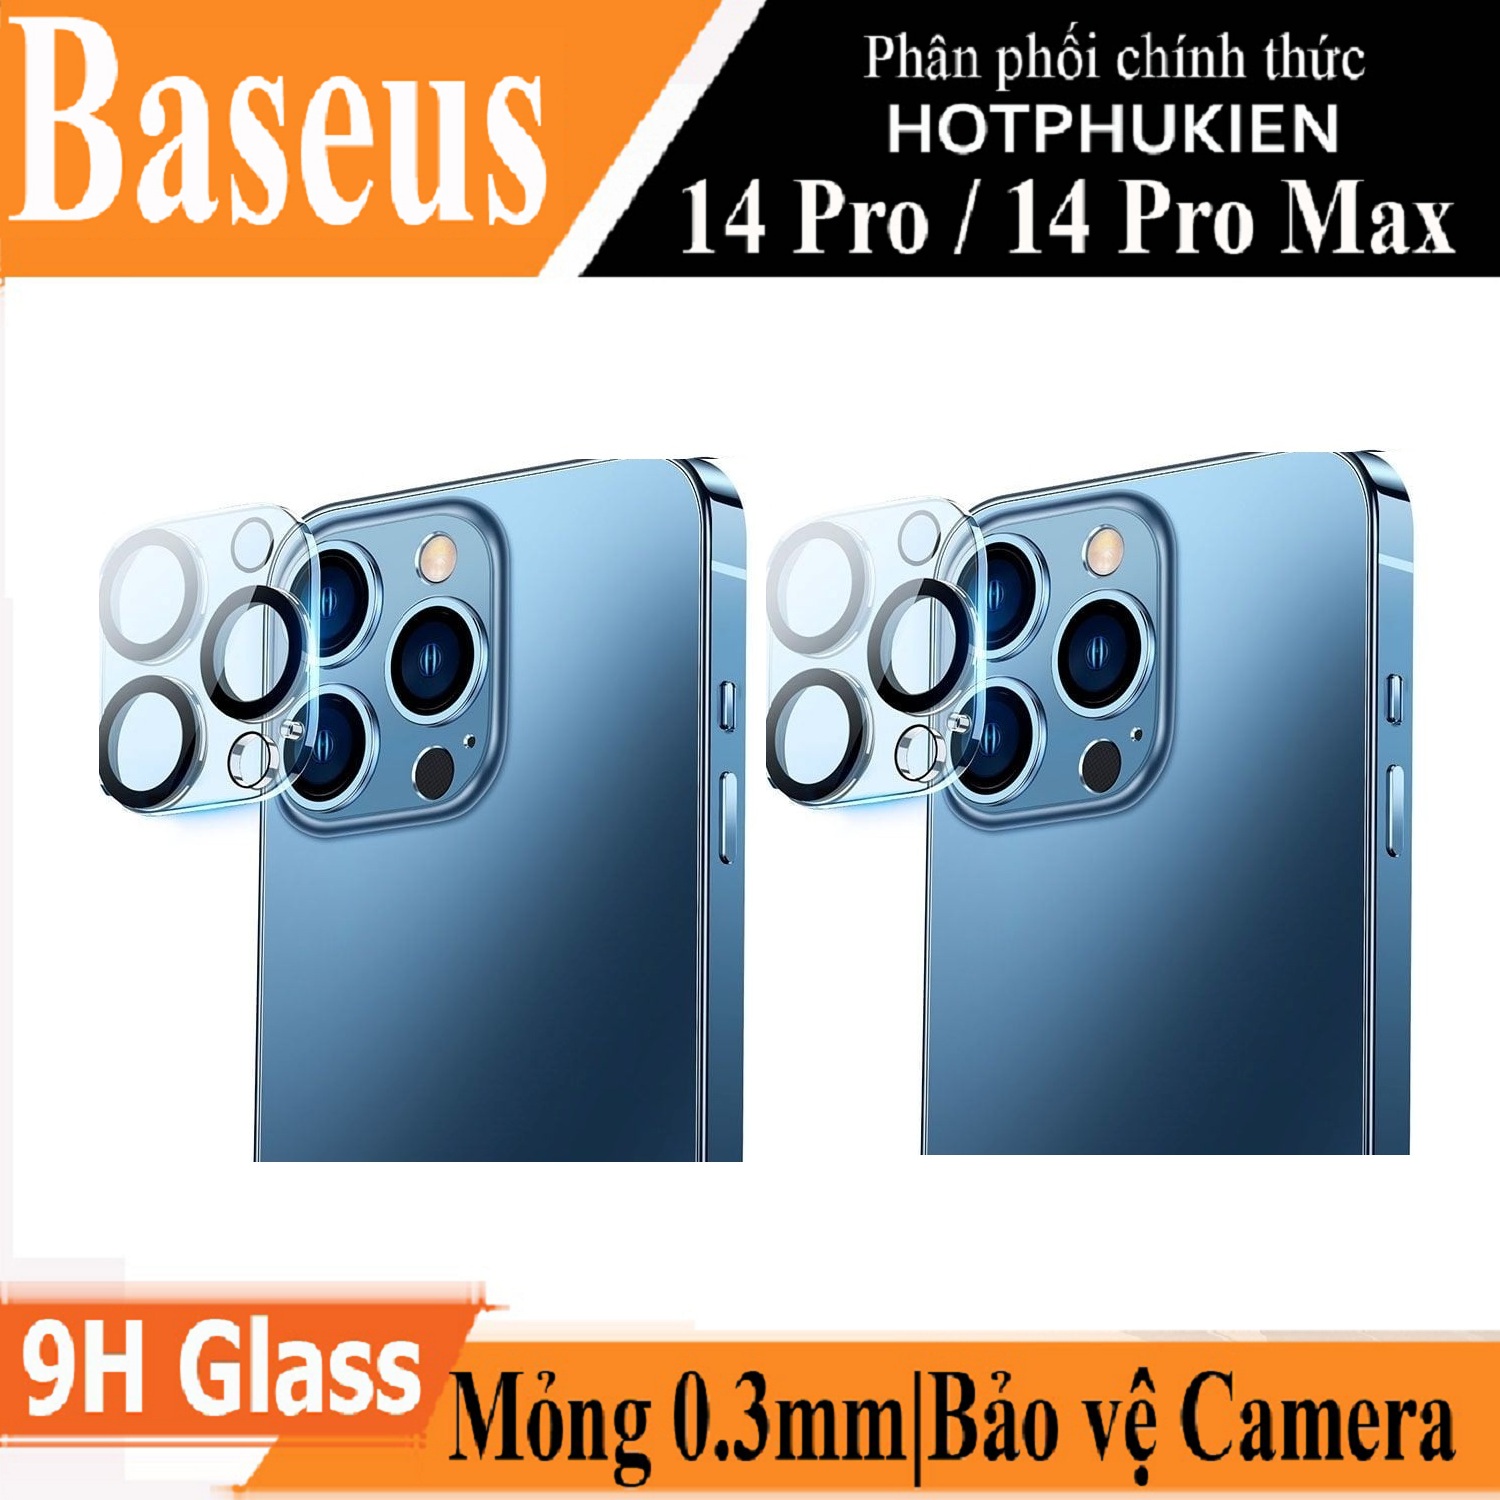 (Mua 1 tặng 1) Miếng dán kính cường lực bảo vệ camera cho iPhone 14 Pro Max hiệu Baseus Full-coverage Lens